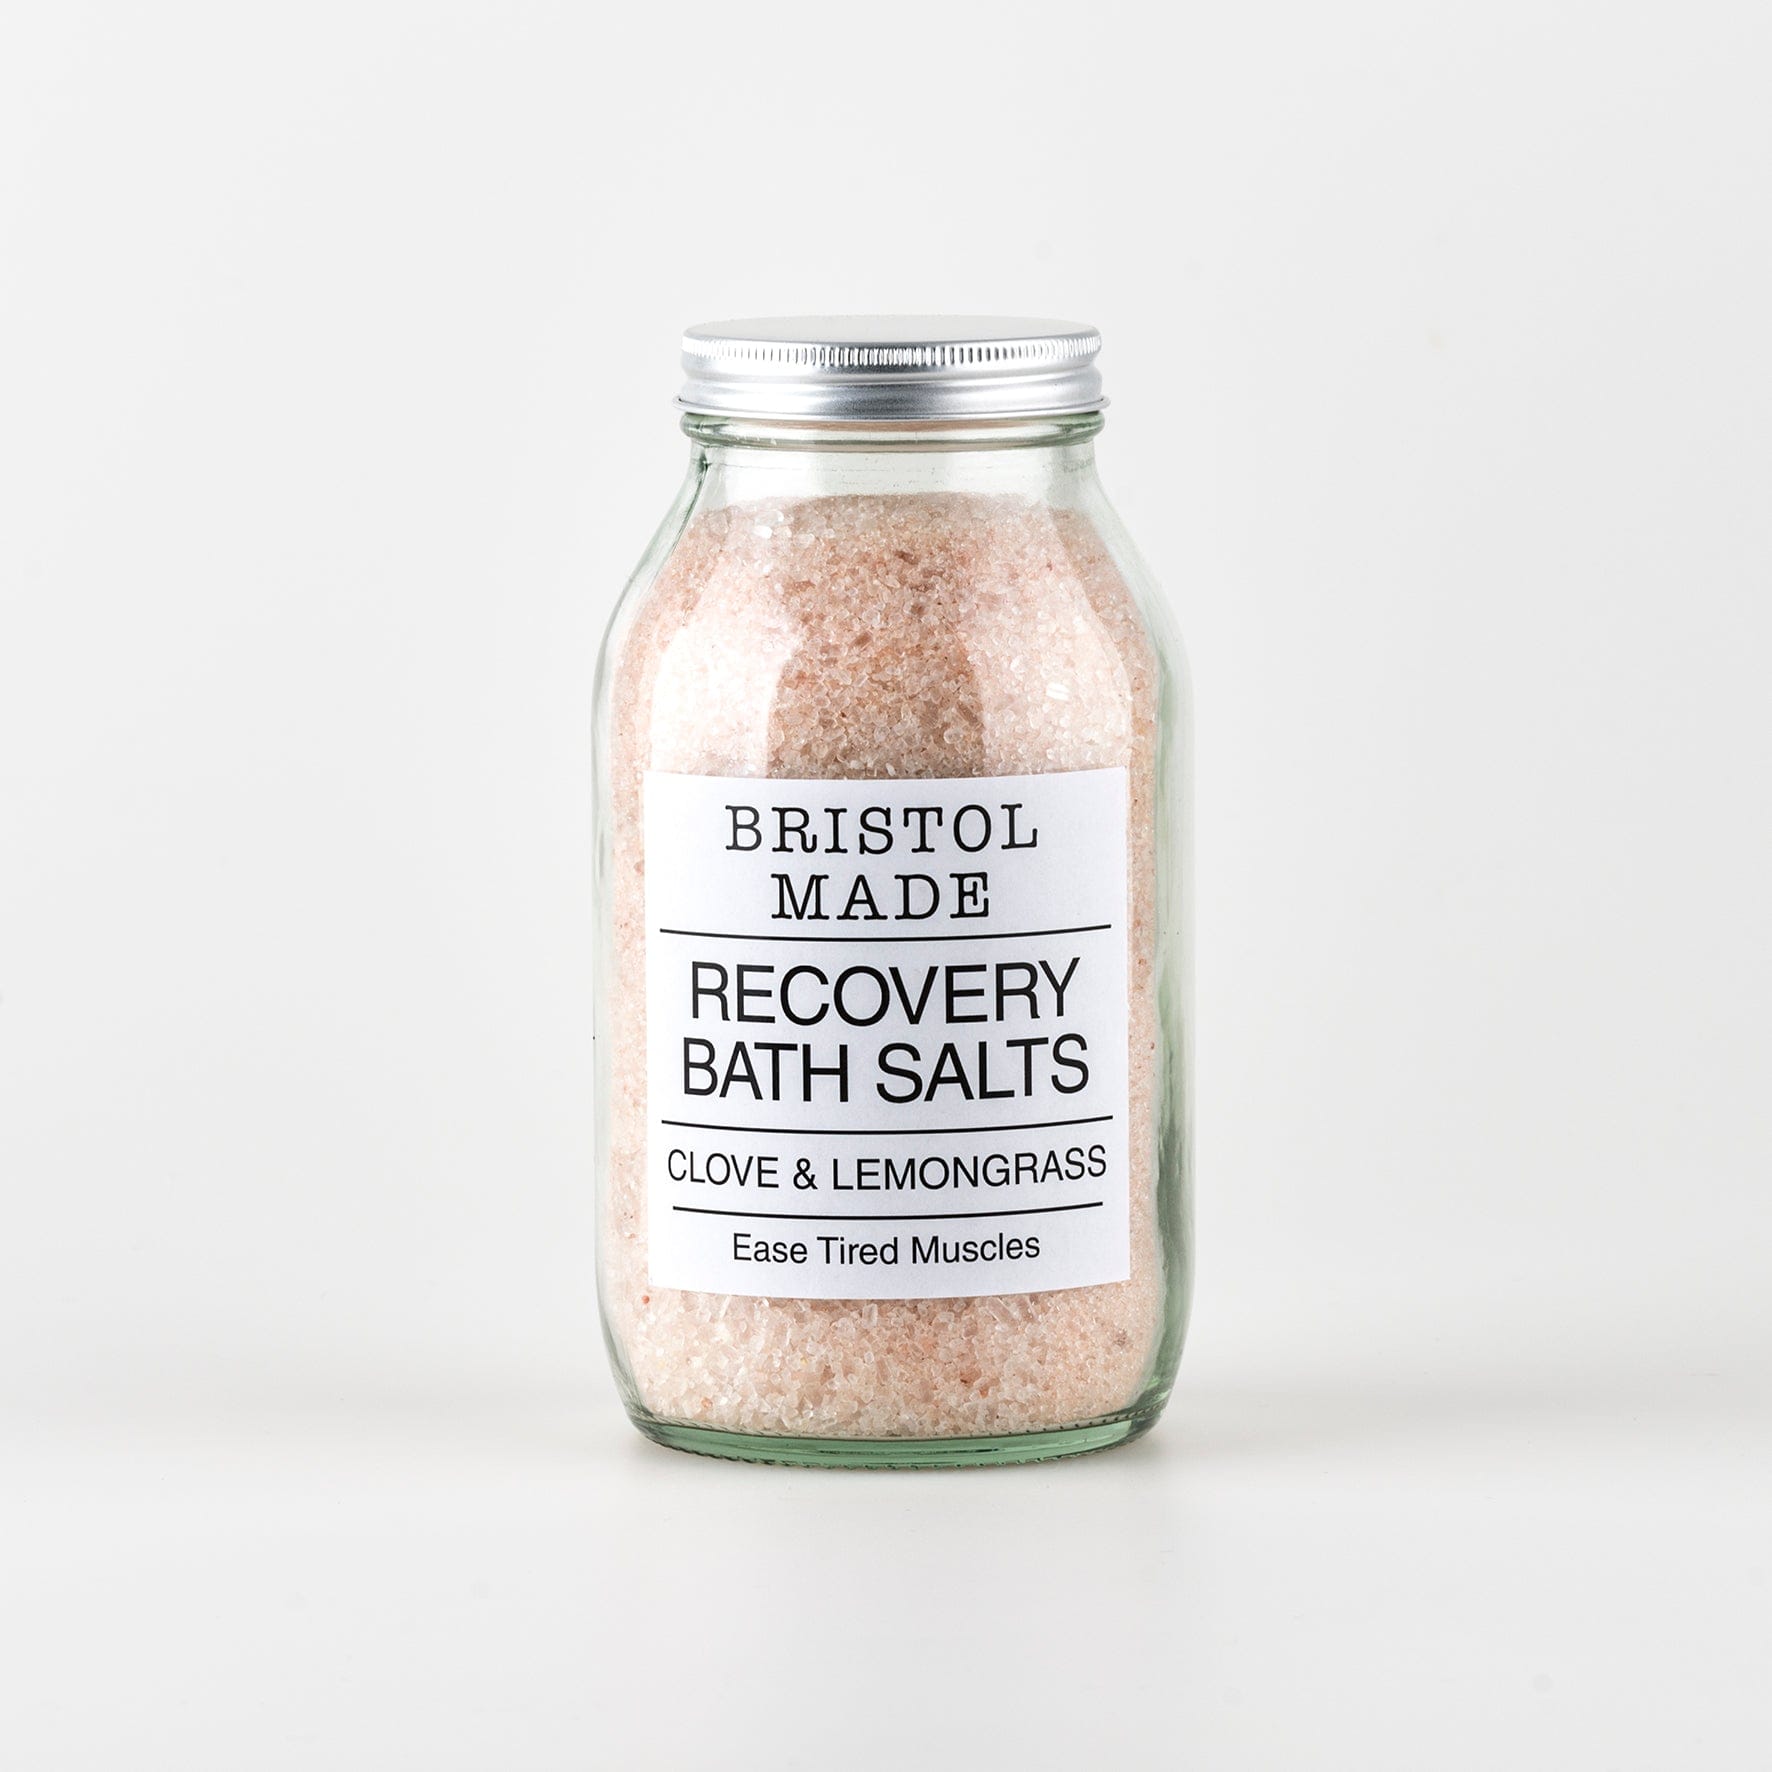 Bristol Made Bath Salts Recovery Bath Salts - Clove and Lemongrass